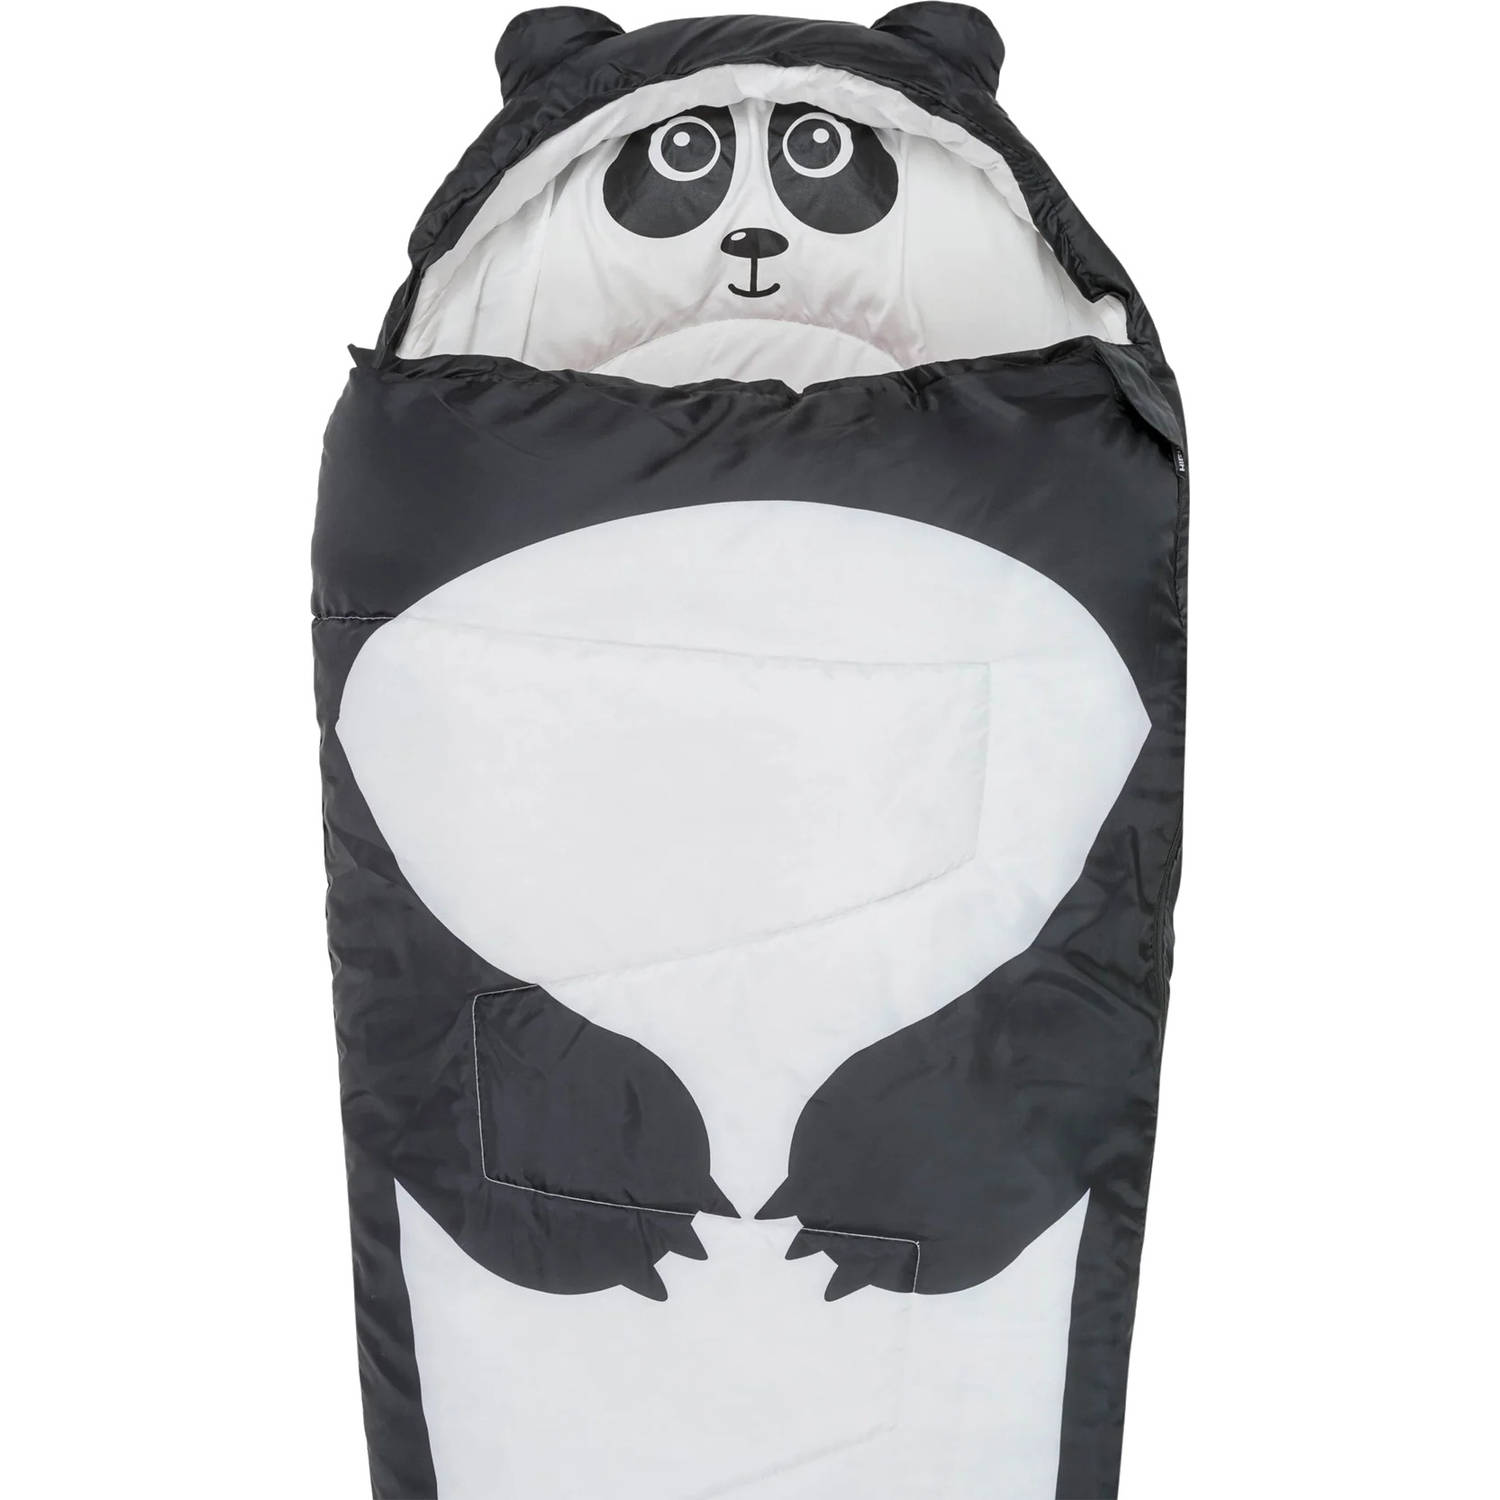 Highlander Mummy Slaapzak Panda 300 Zwart-wit